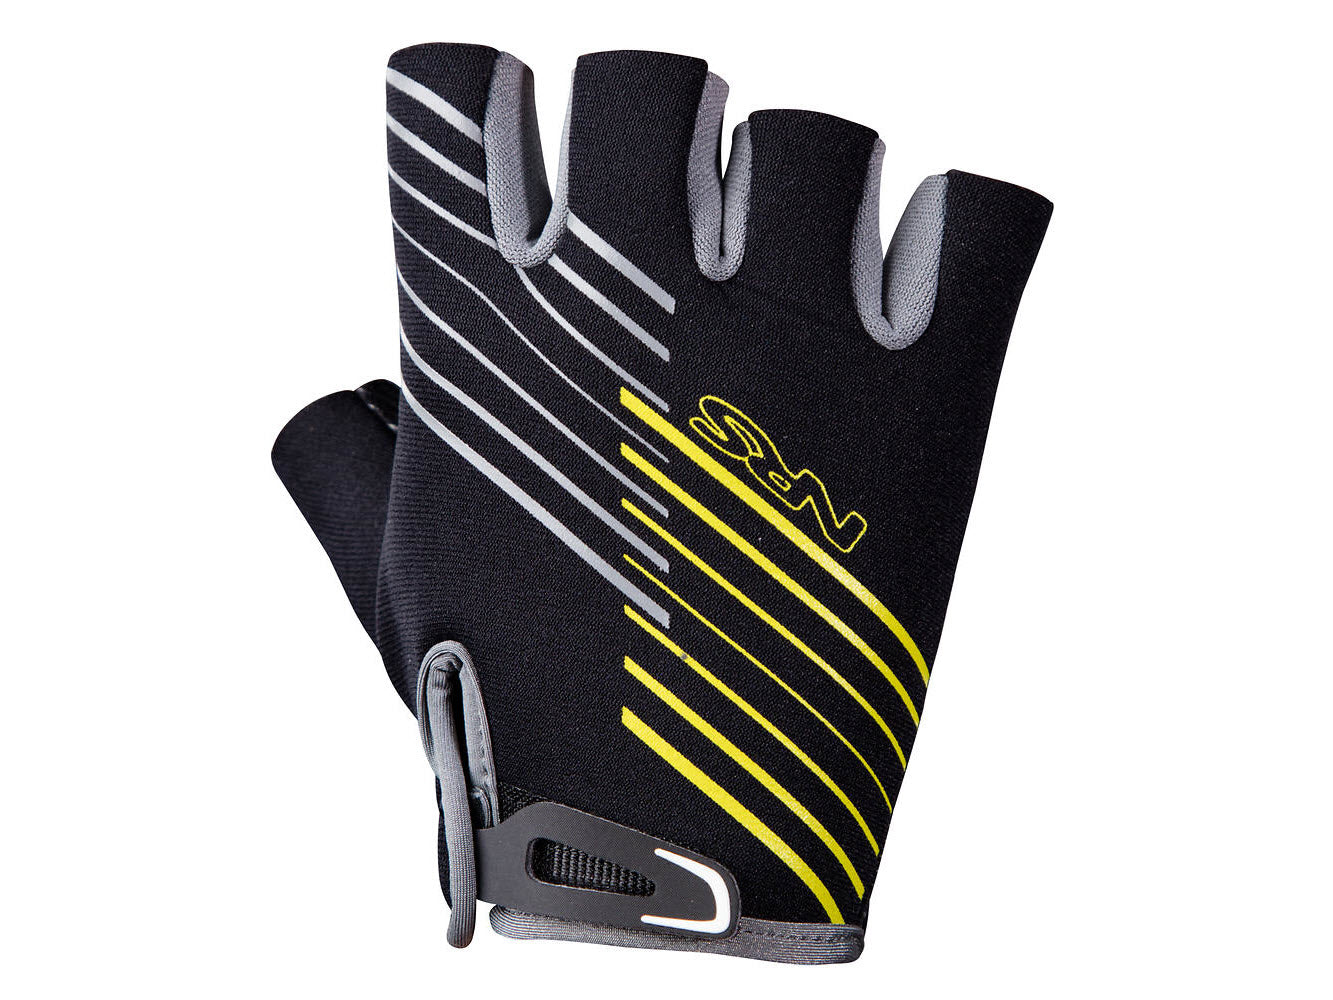 Paddling Handwear - Kayak Gloves and Pogies Tagged gloves